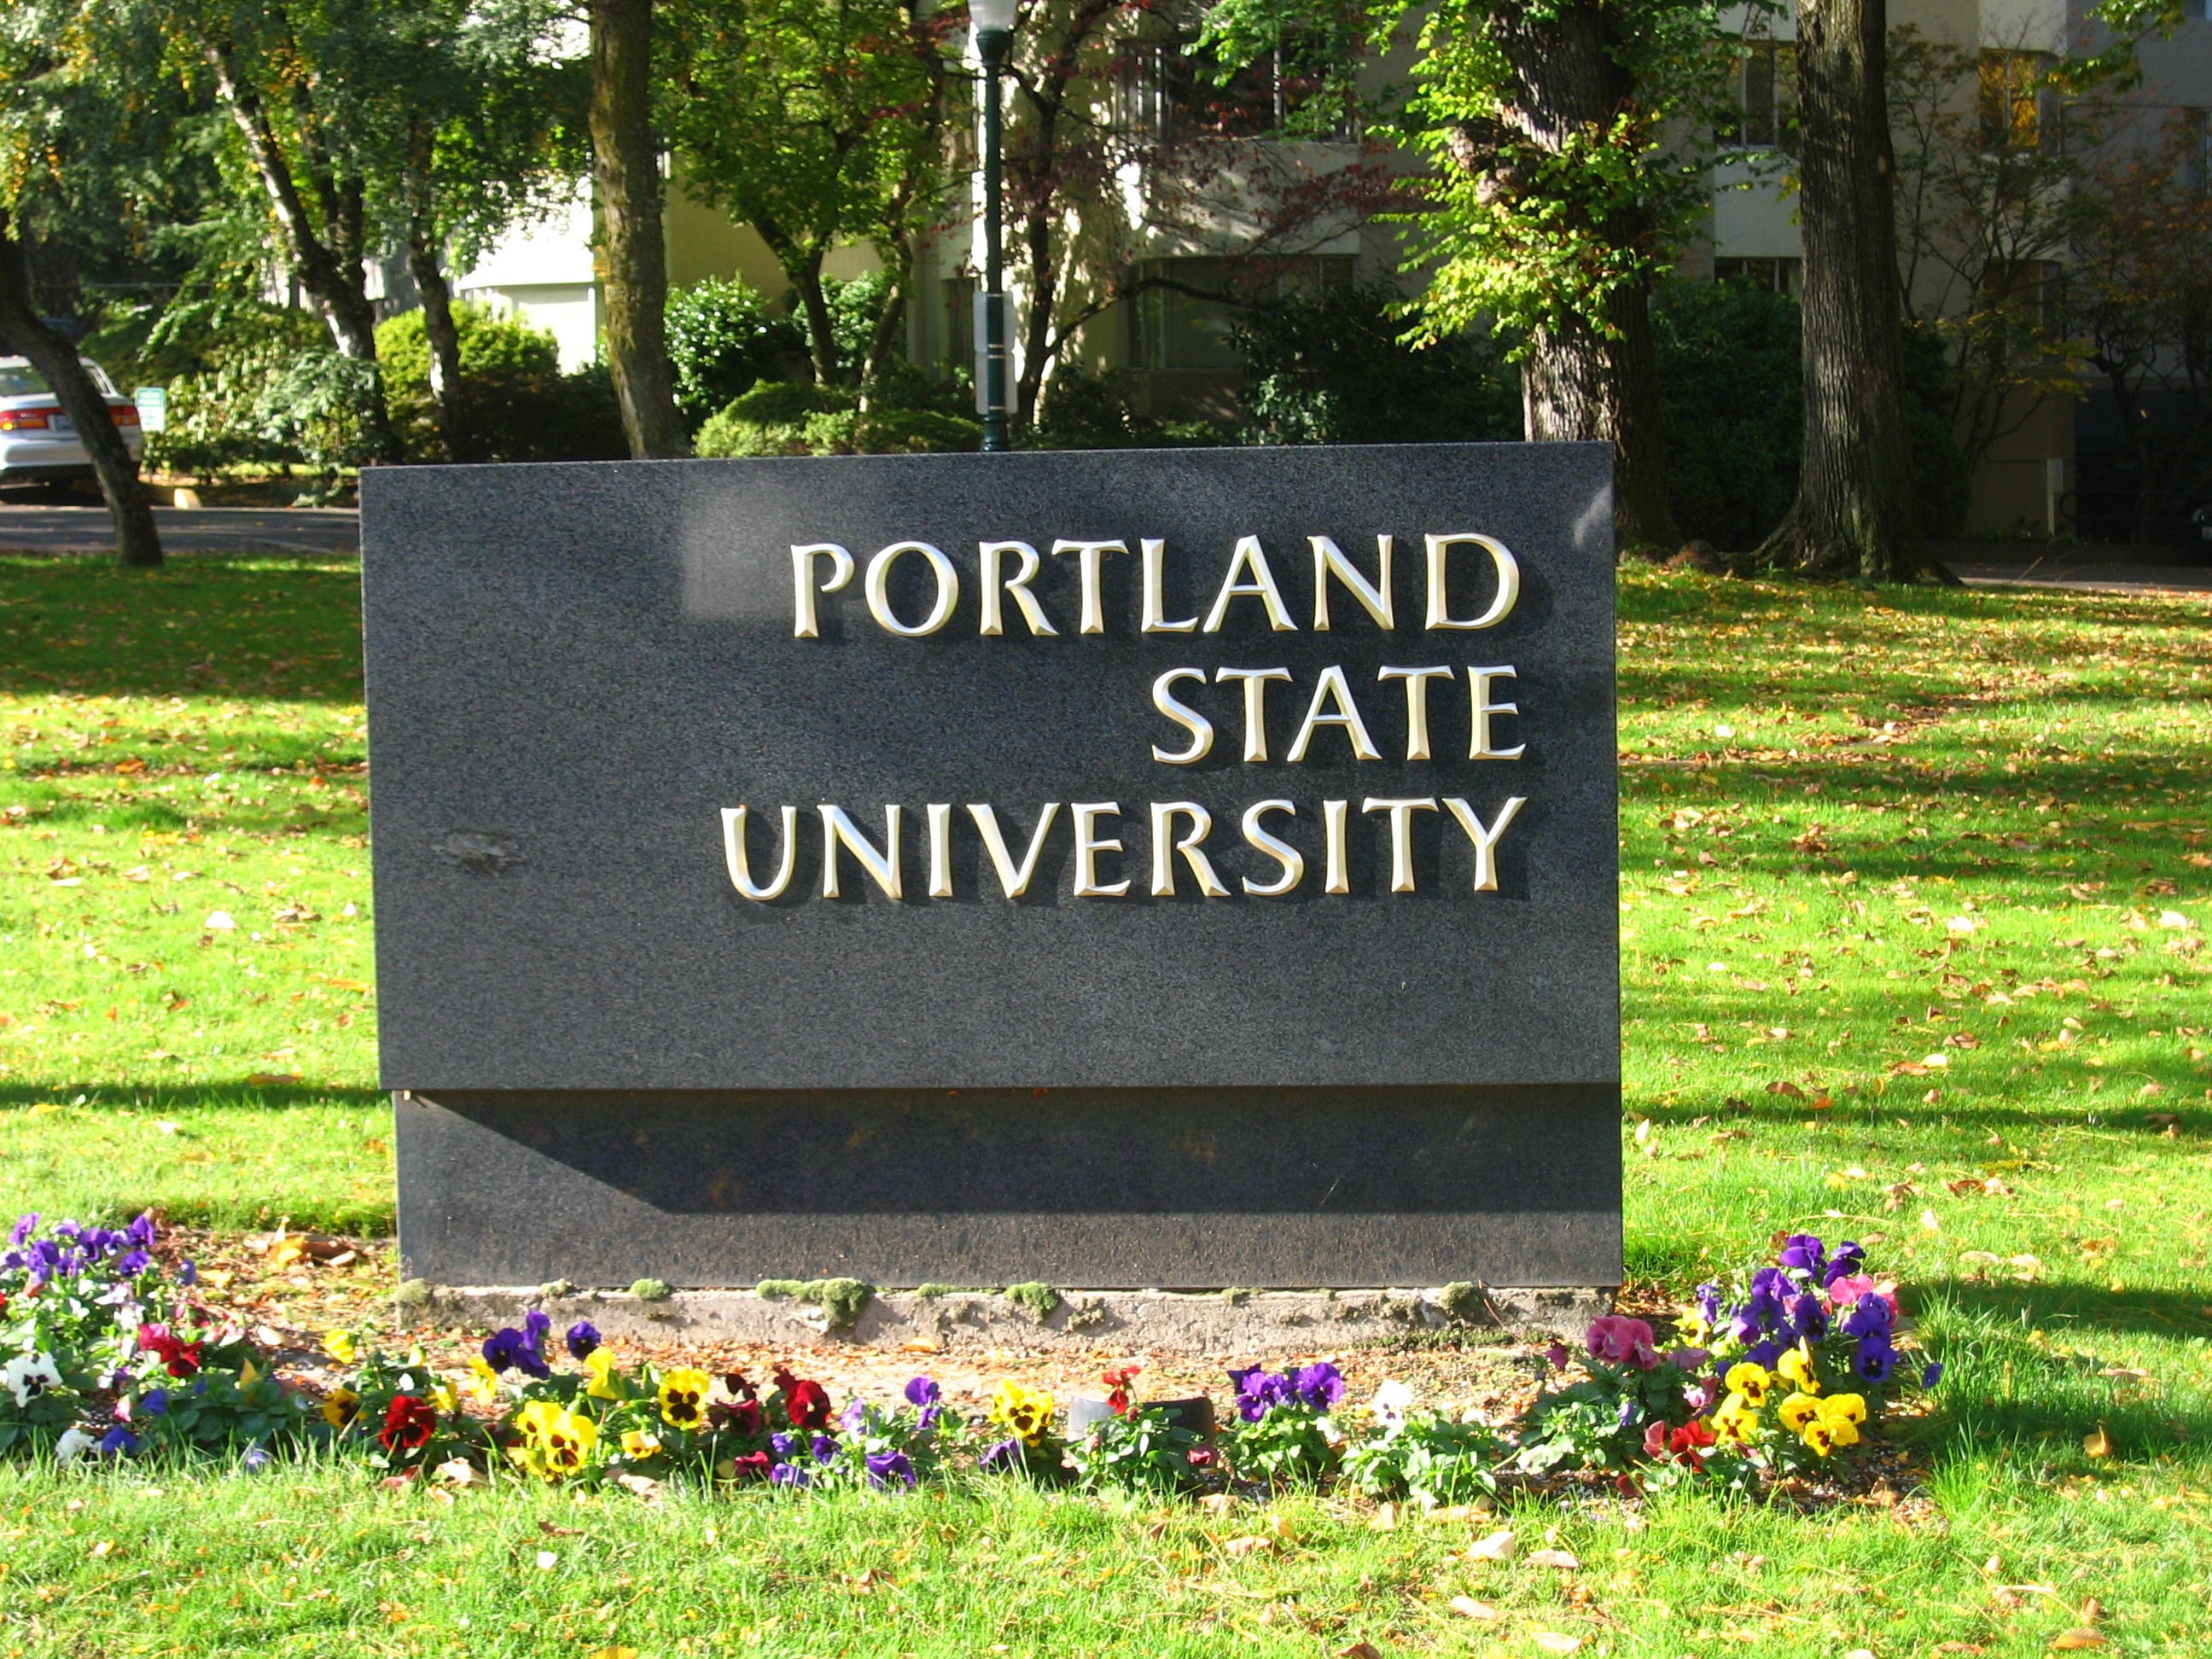 File:Portland state university sign.jpg - Wikimedia Commons